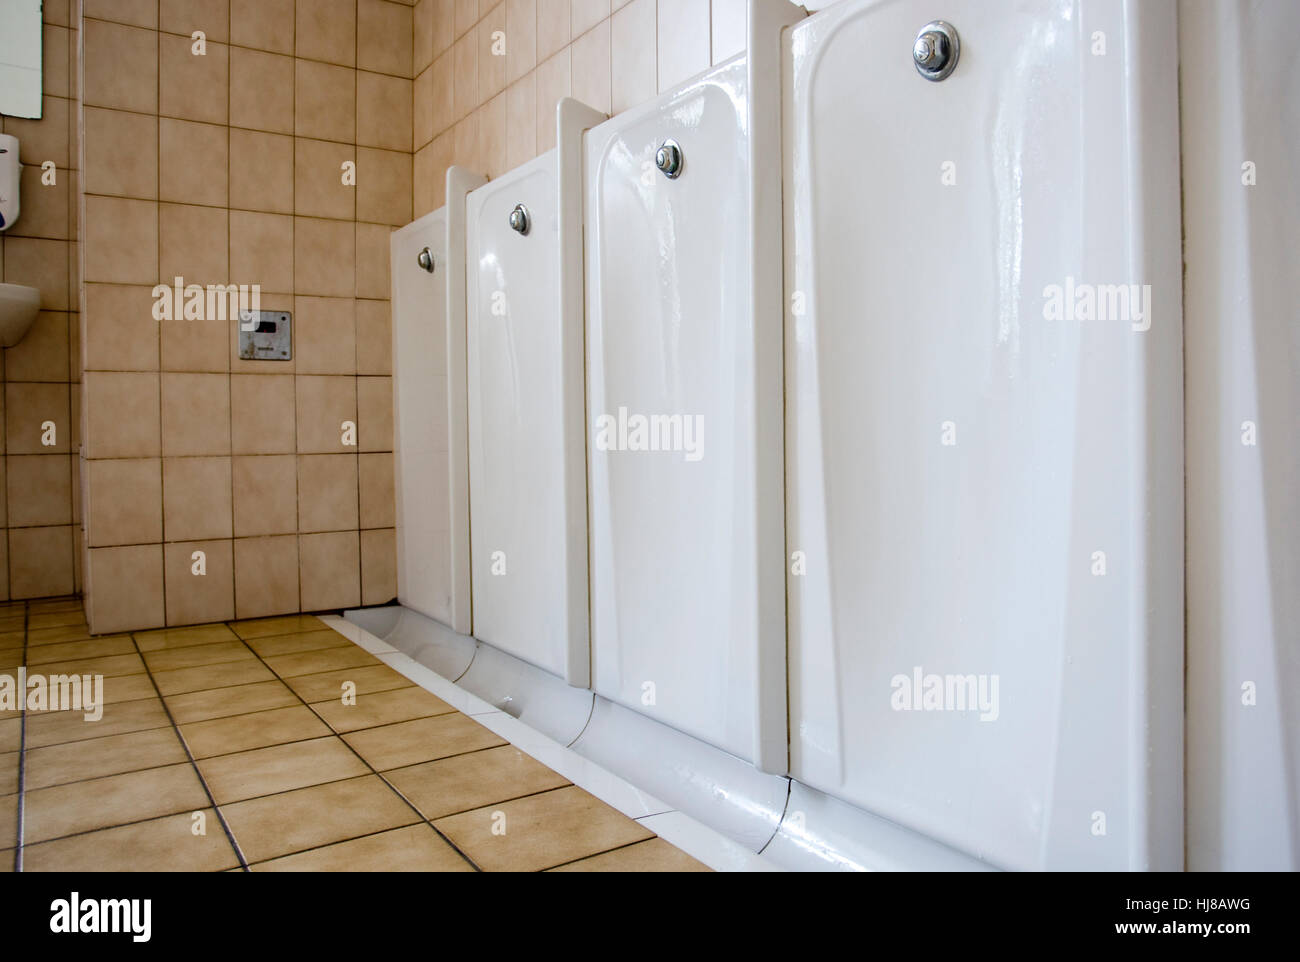 Urinal, Pissoir, lavatory, restroom Stock Photo